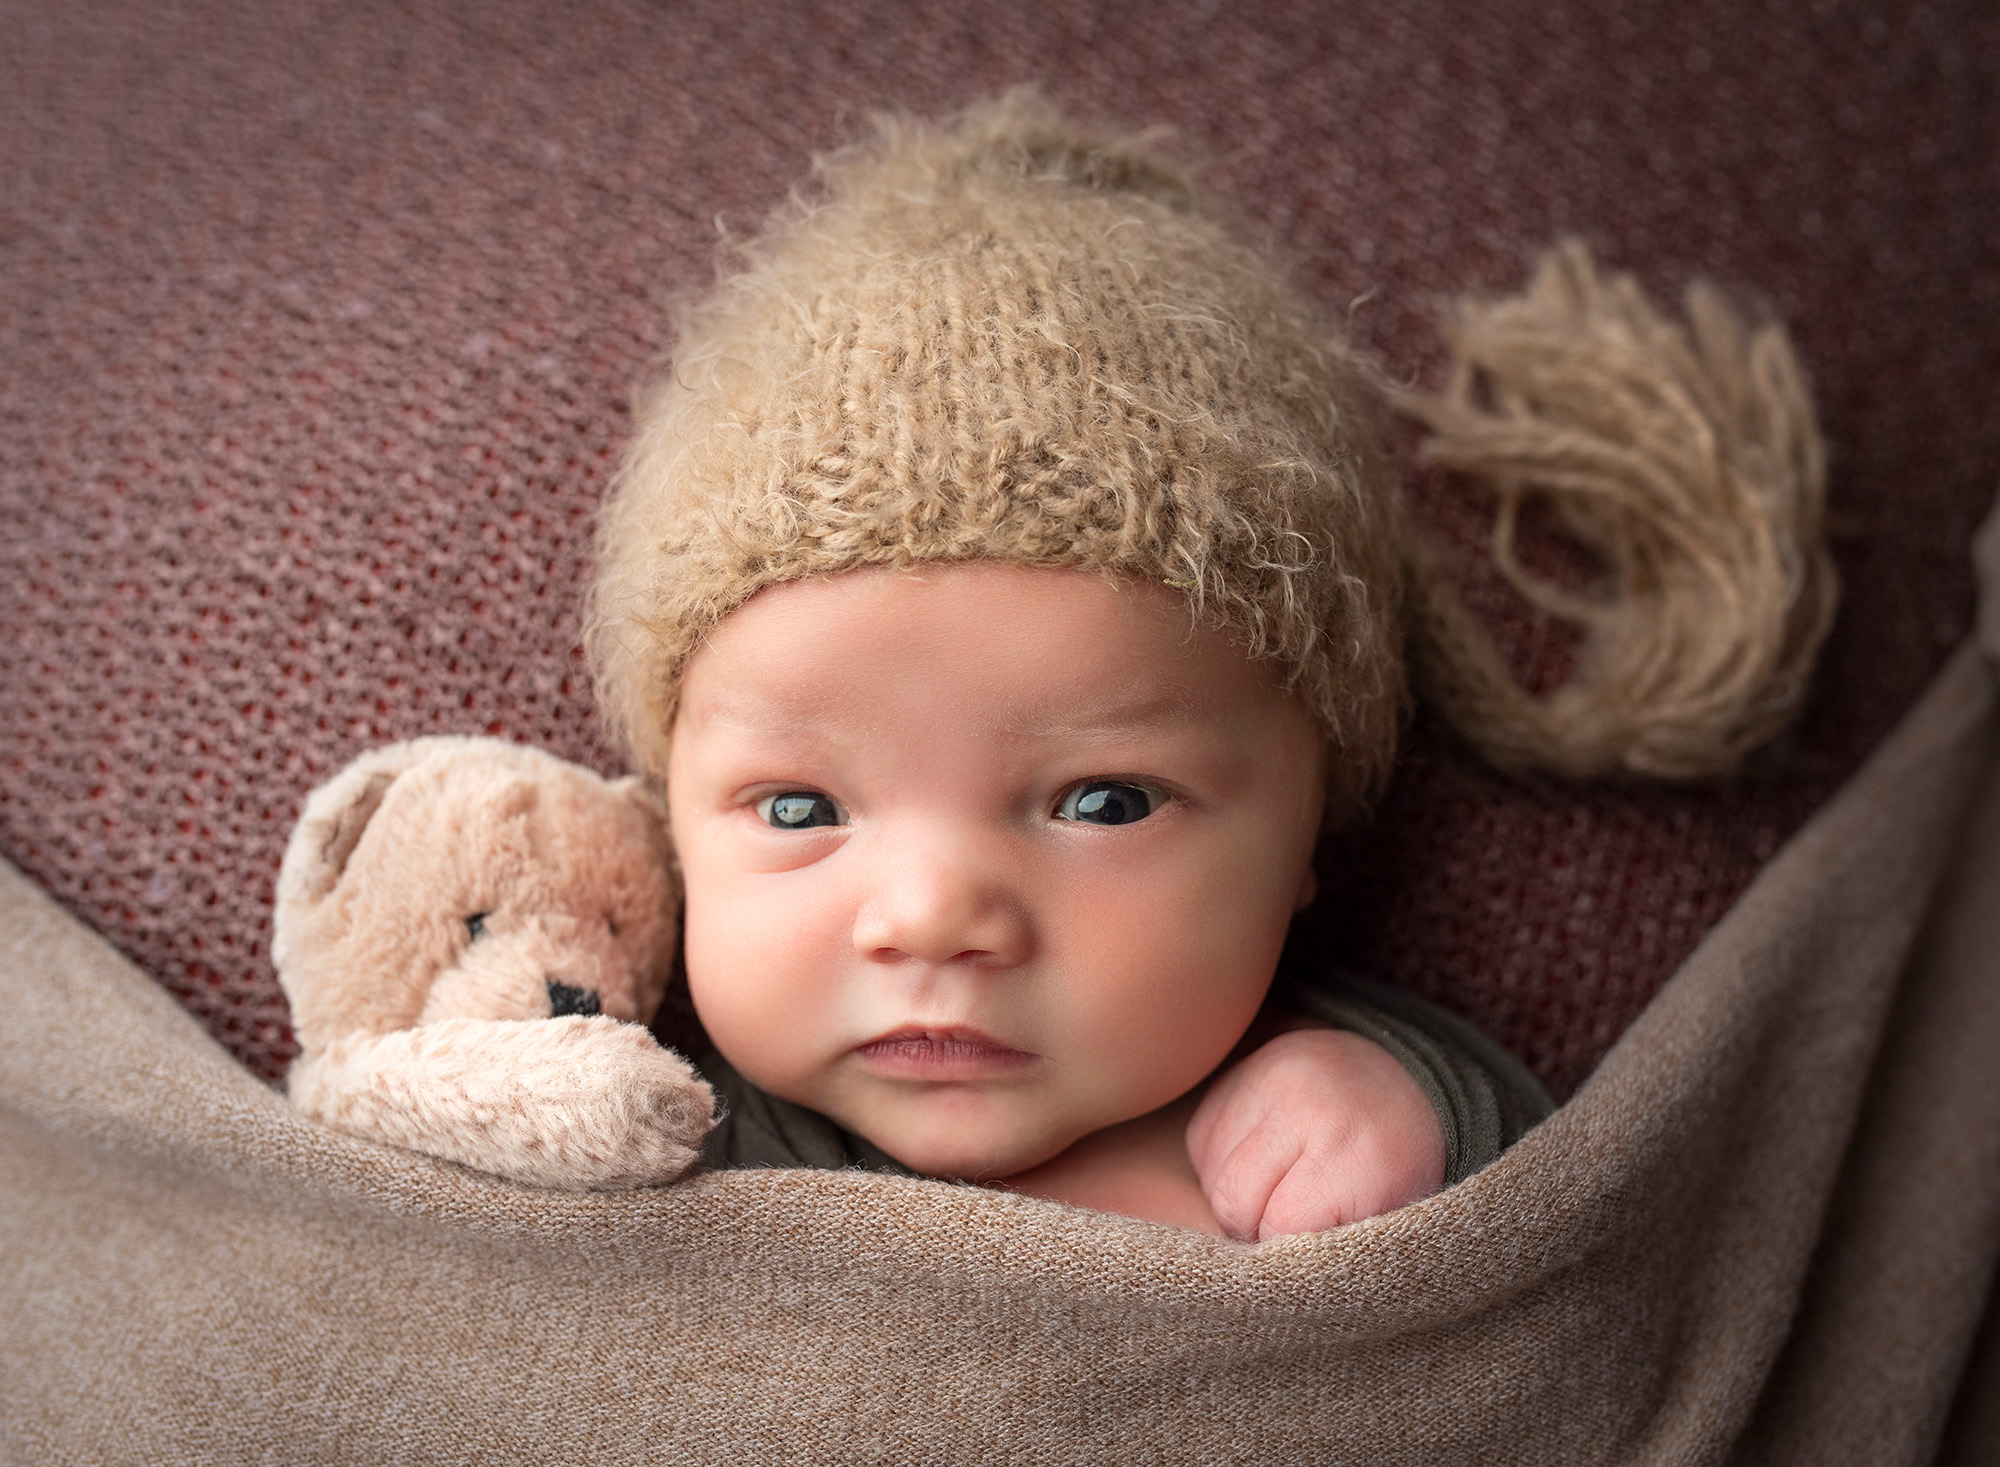 High school sweethearts newborn photos newborn baby boy wide awake wearing brown bonnet tucked in with a teddy bear